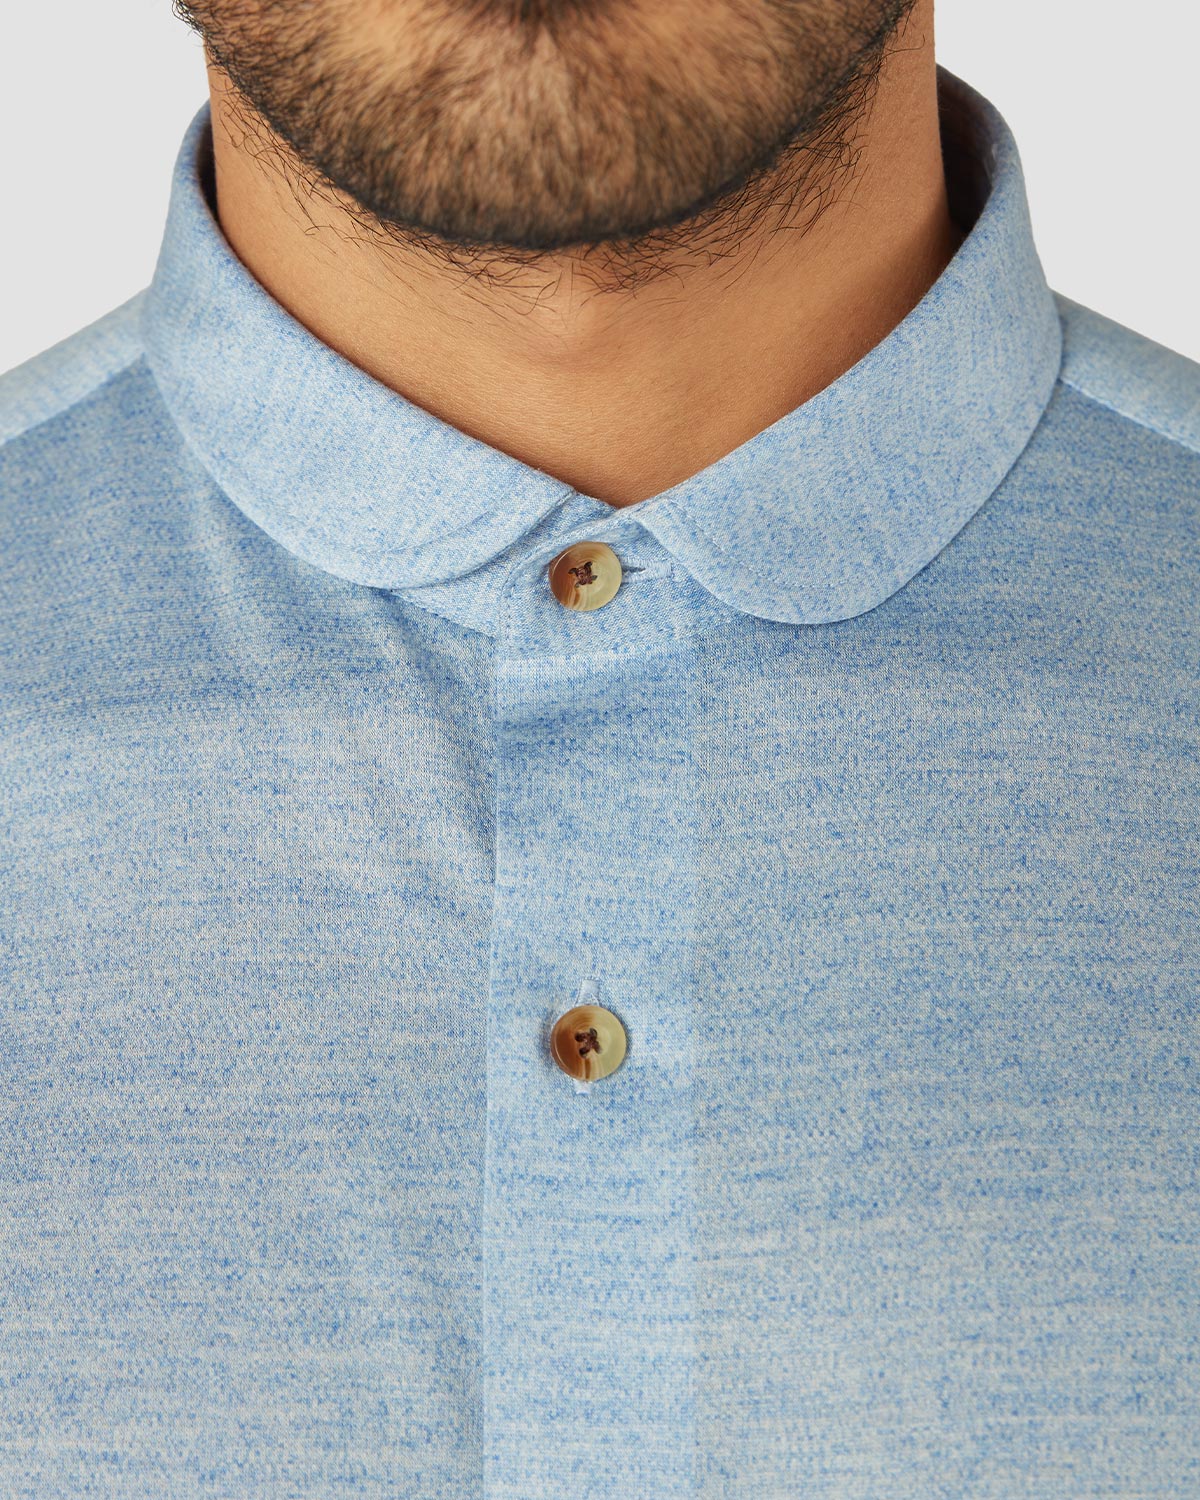 Bombay Shirt Company - Japanese Shallow Waters Knit Shirt